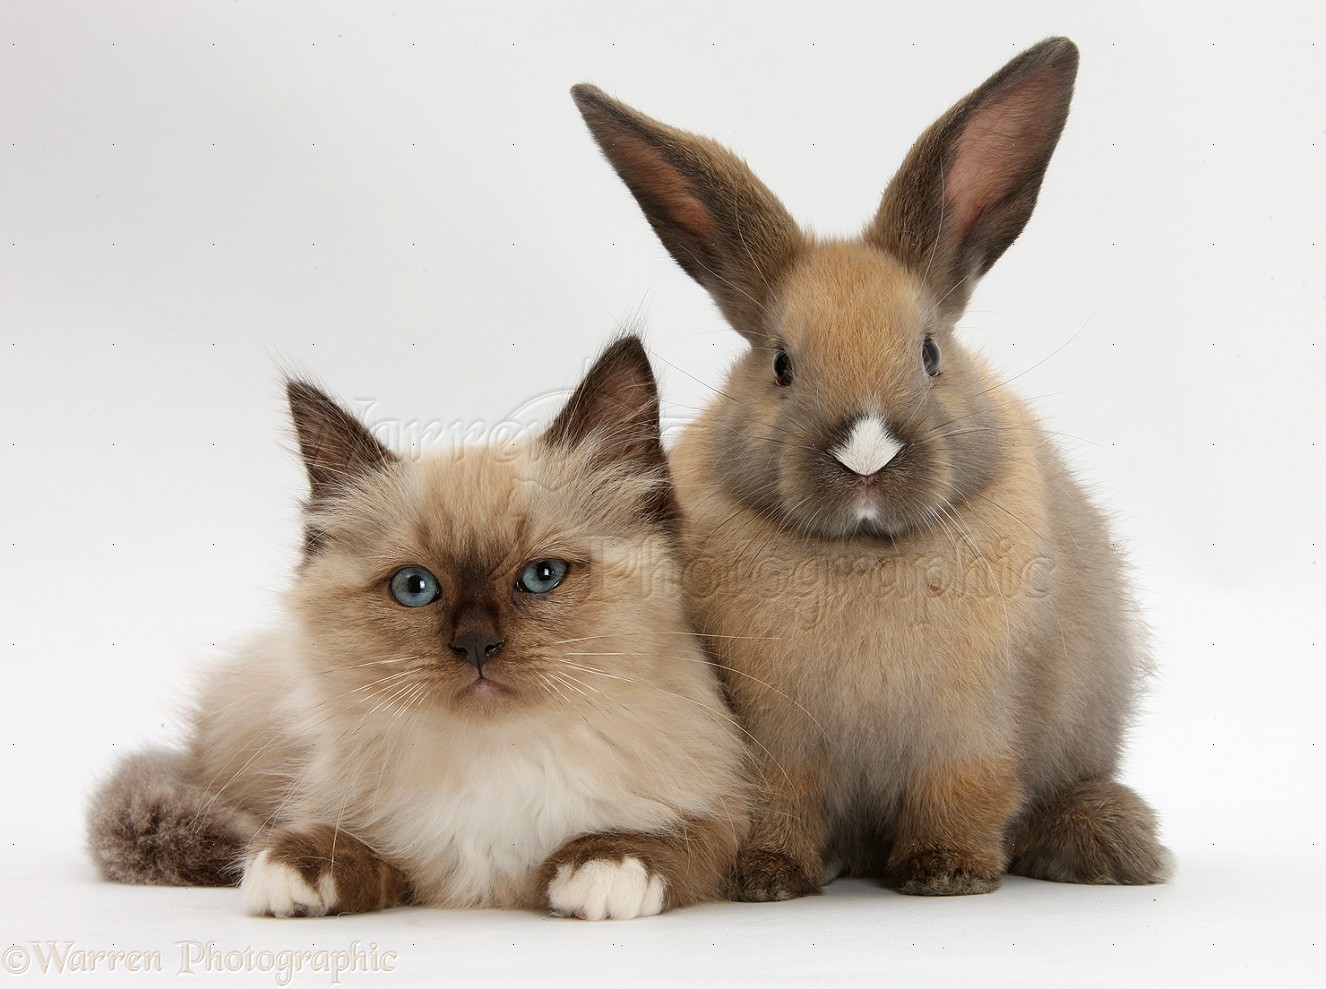 Pets Ragdollcross kitten and young rabbit photo WP29370